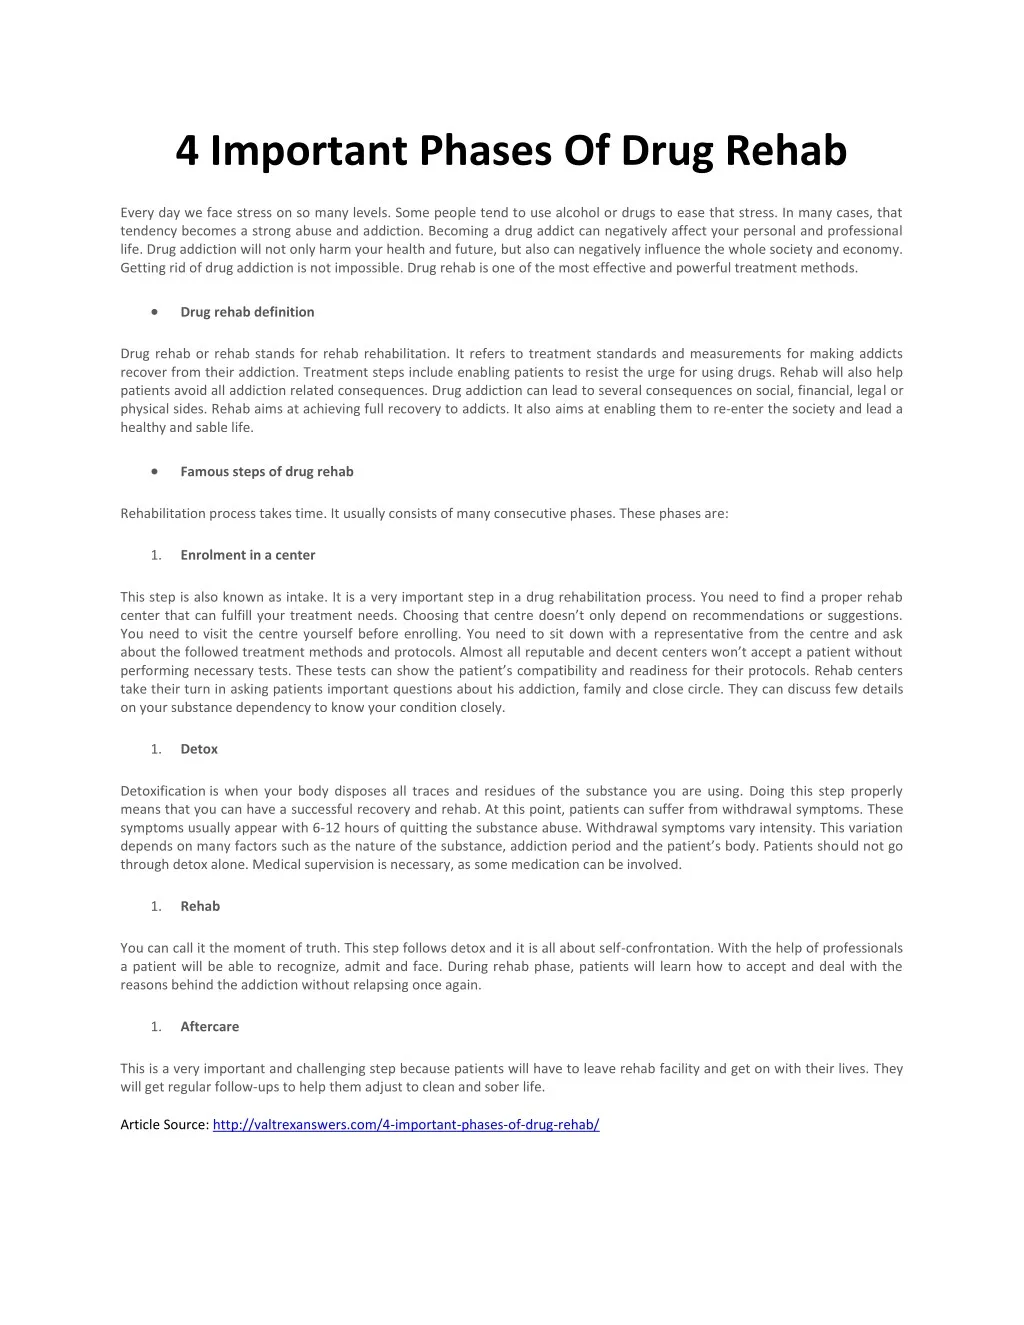 4 important phases of drug rehab